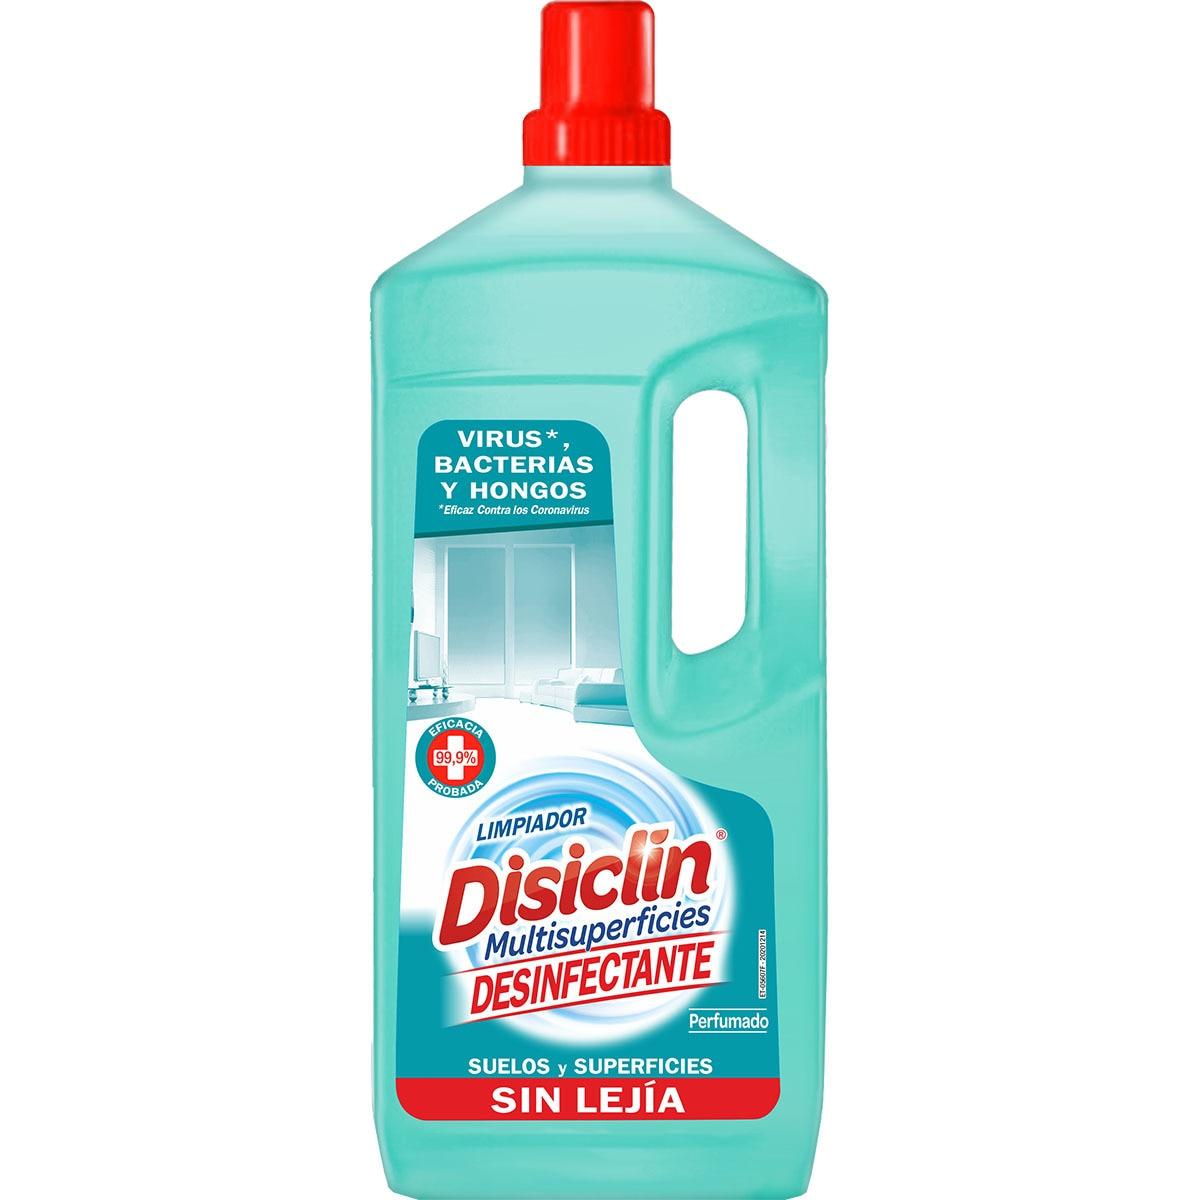 Disiclin Desinfectante Multisuperficies 1,4 litros